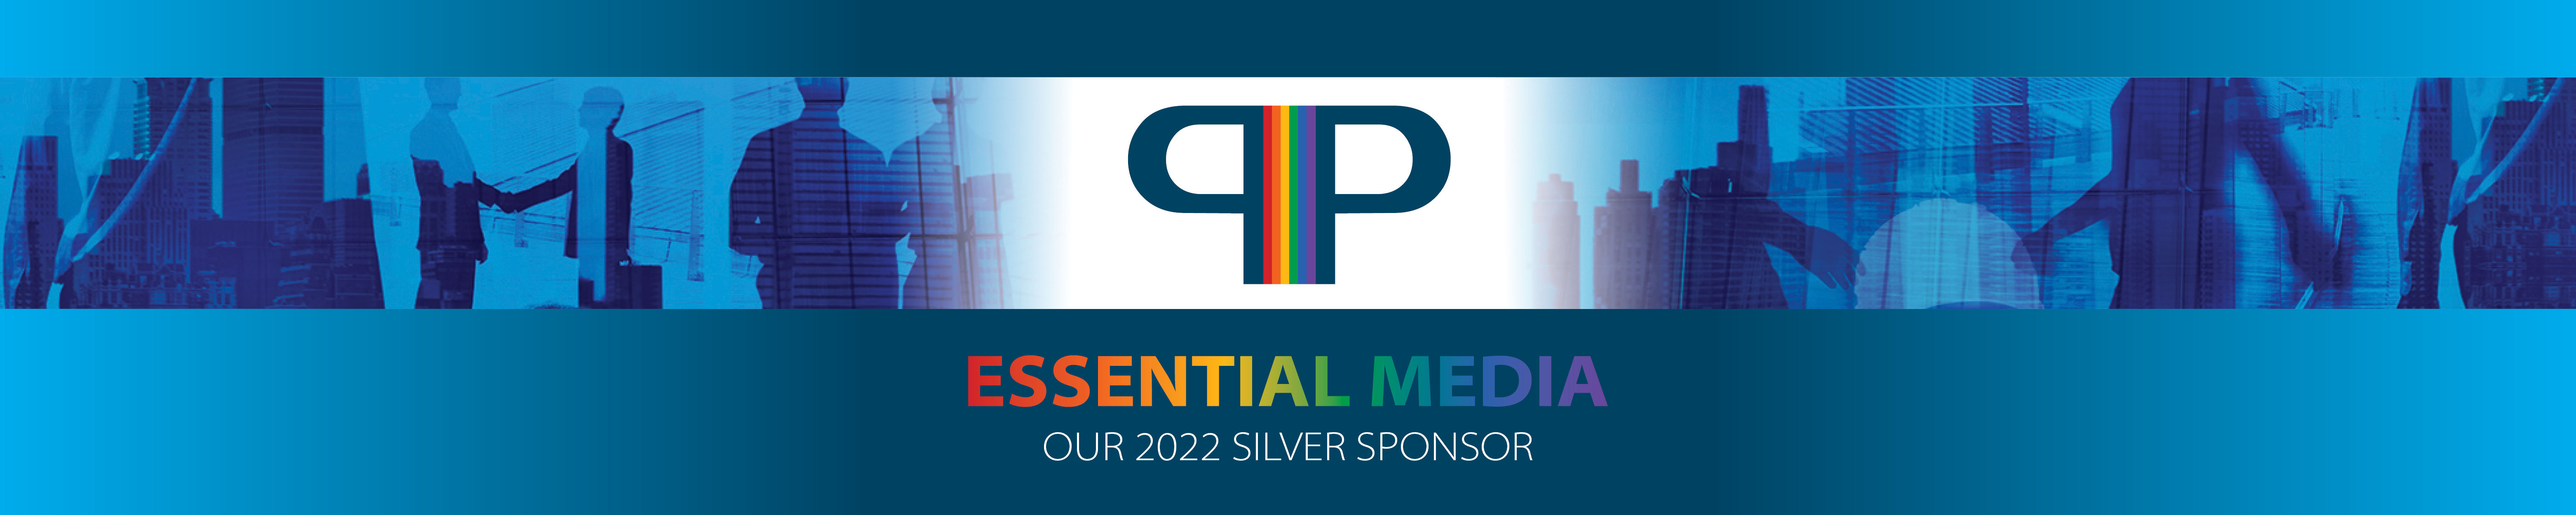 PIP_Conference_Sponsor_EssentialMedia